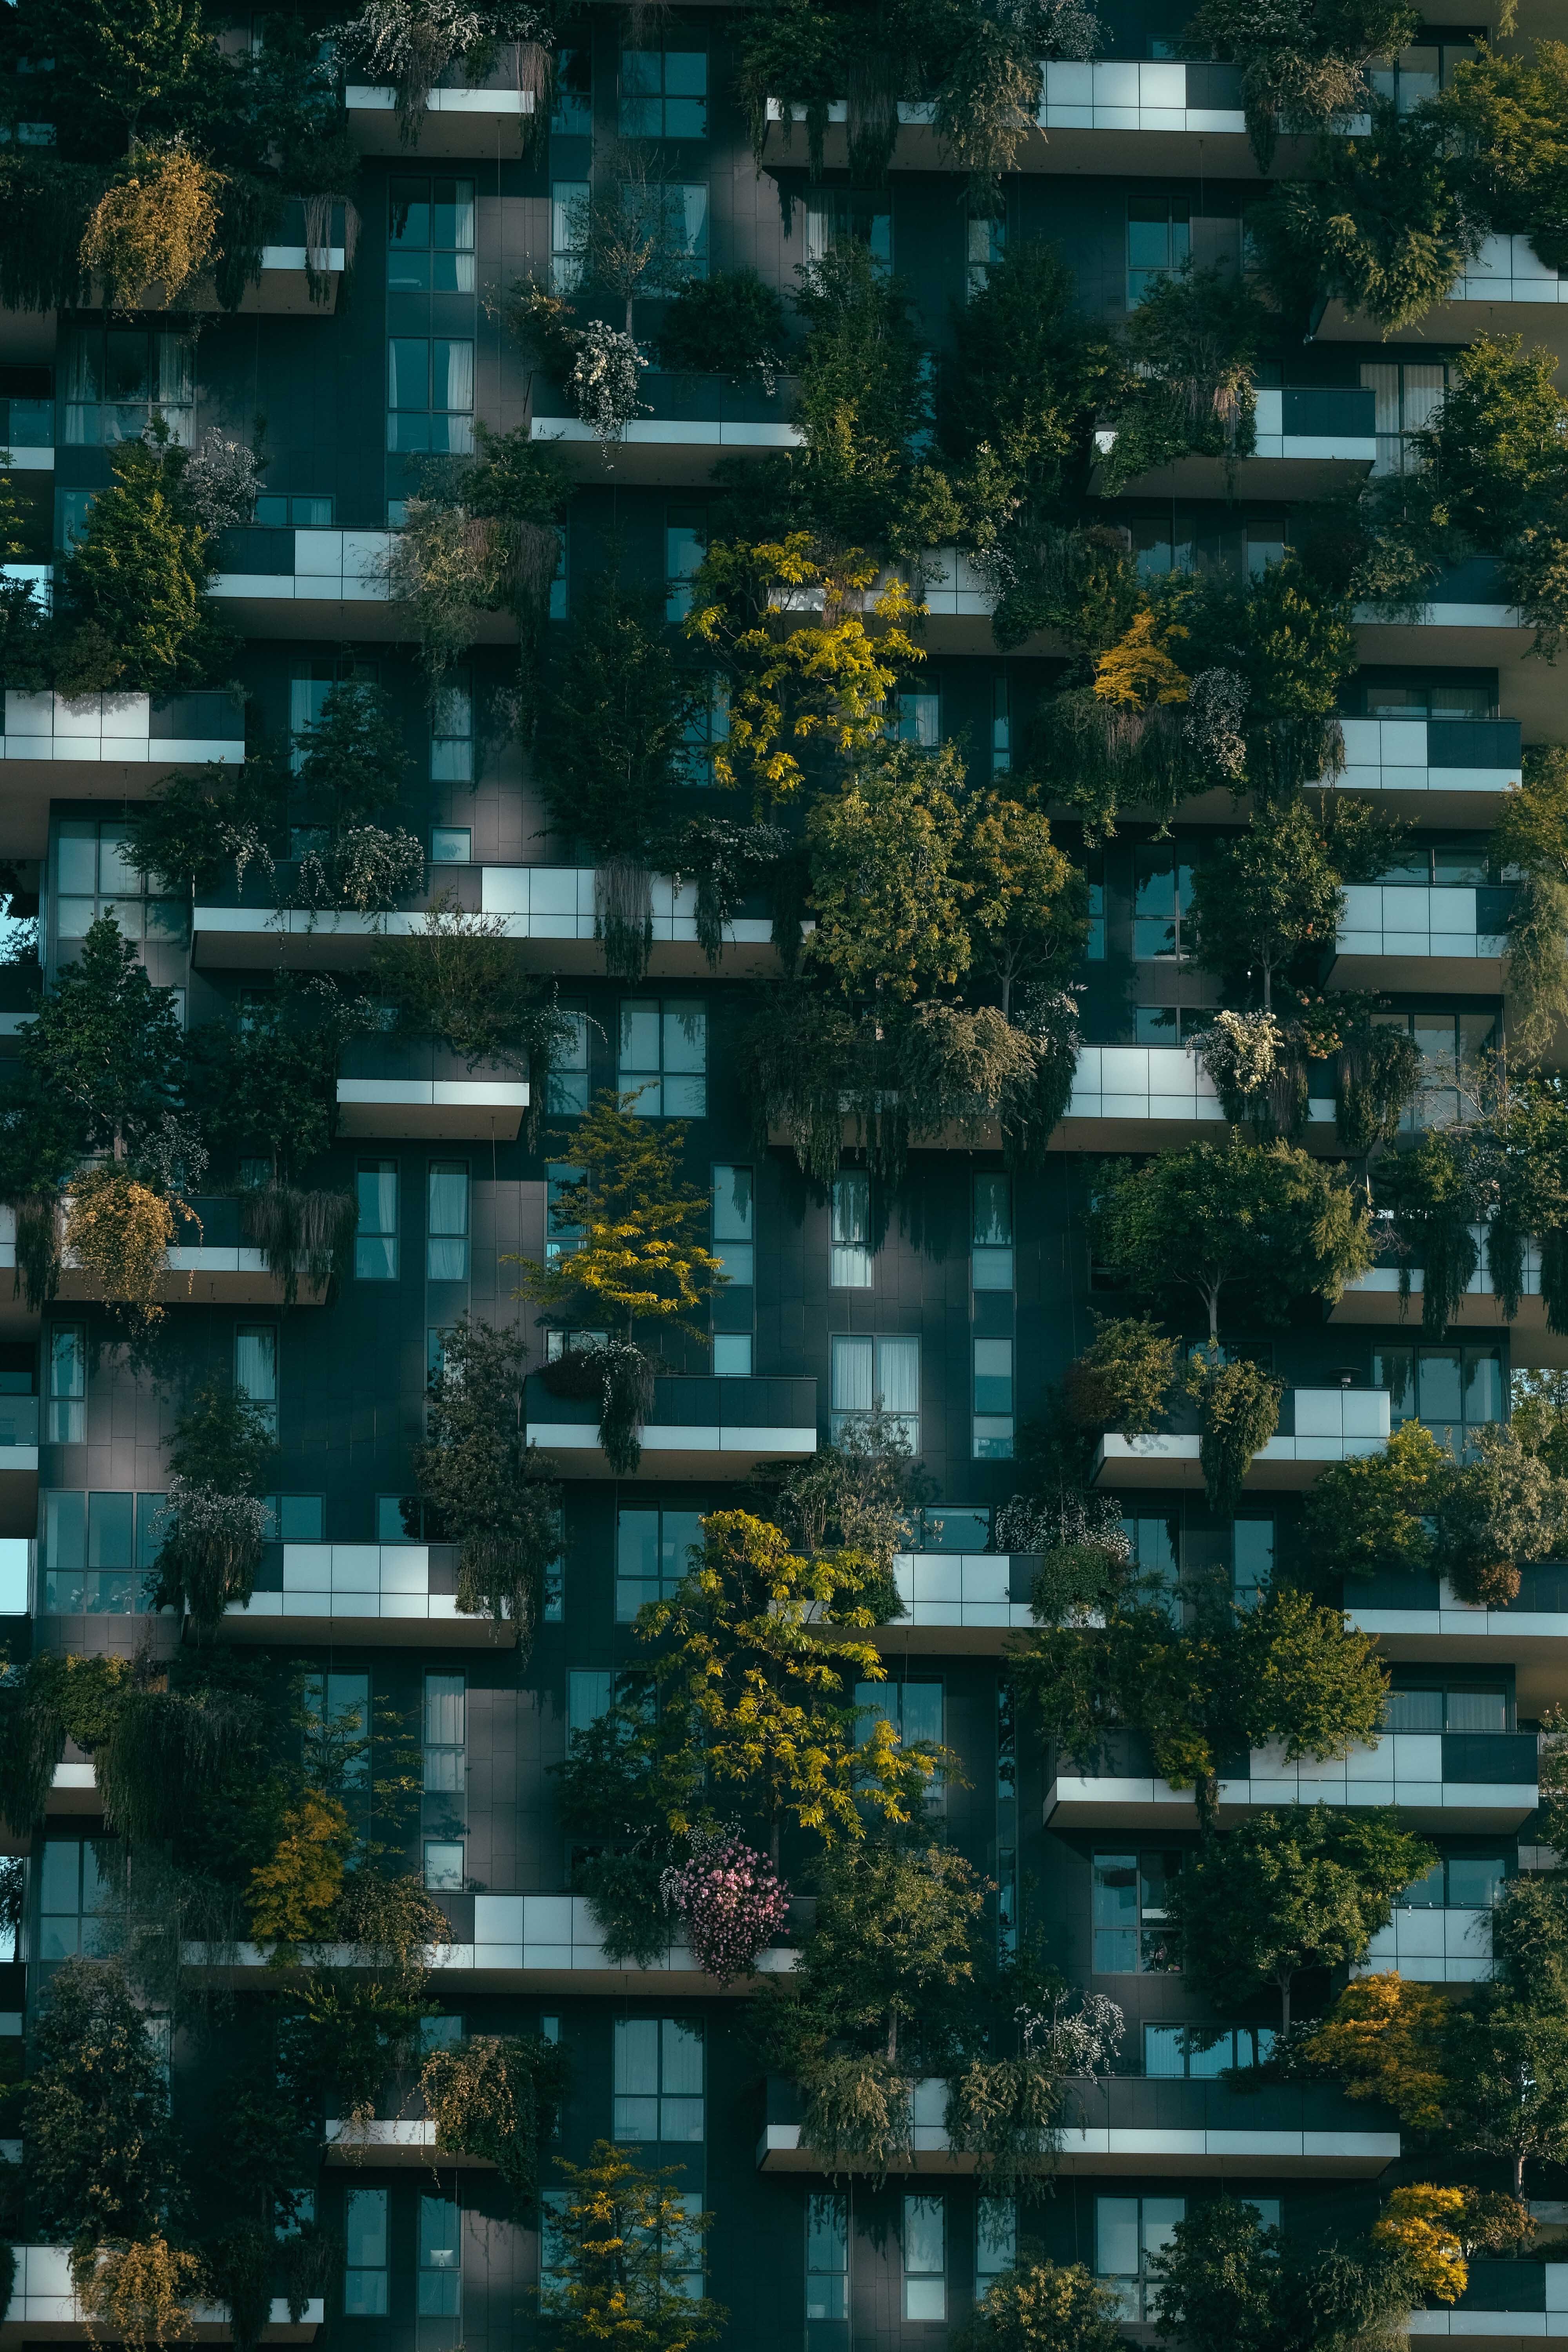 How To Plan A Green Residential Development That Meets All Environmental Legislation